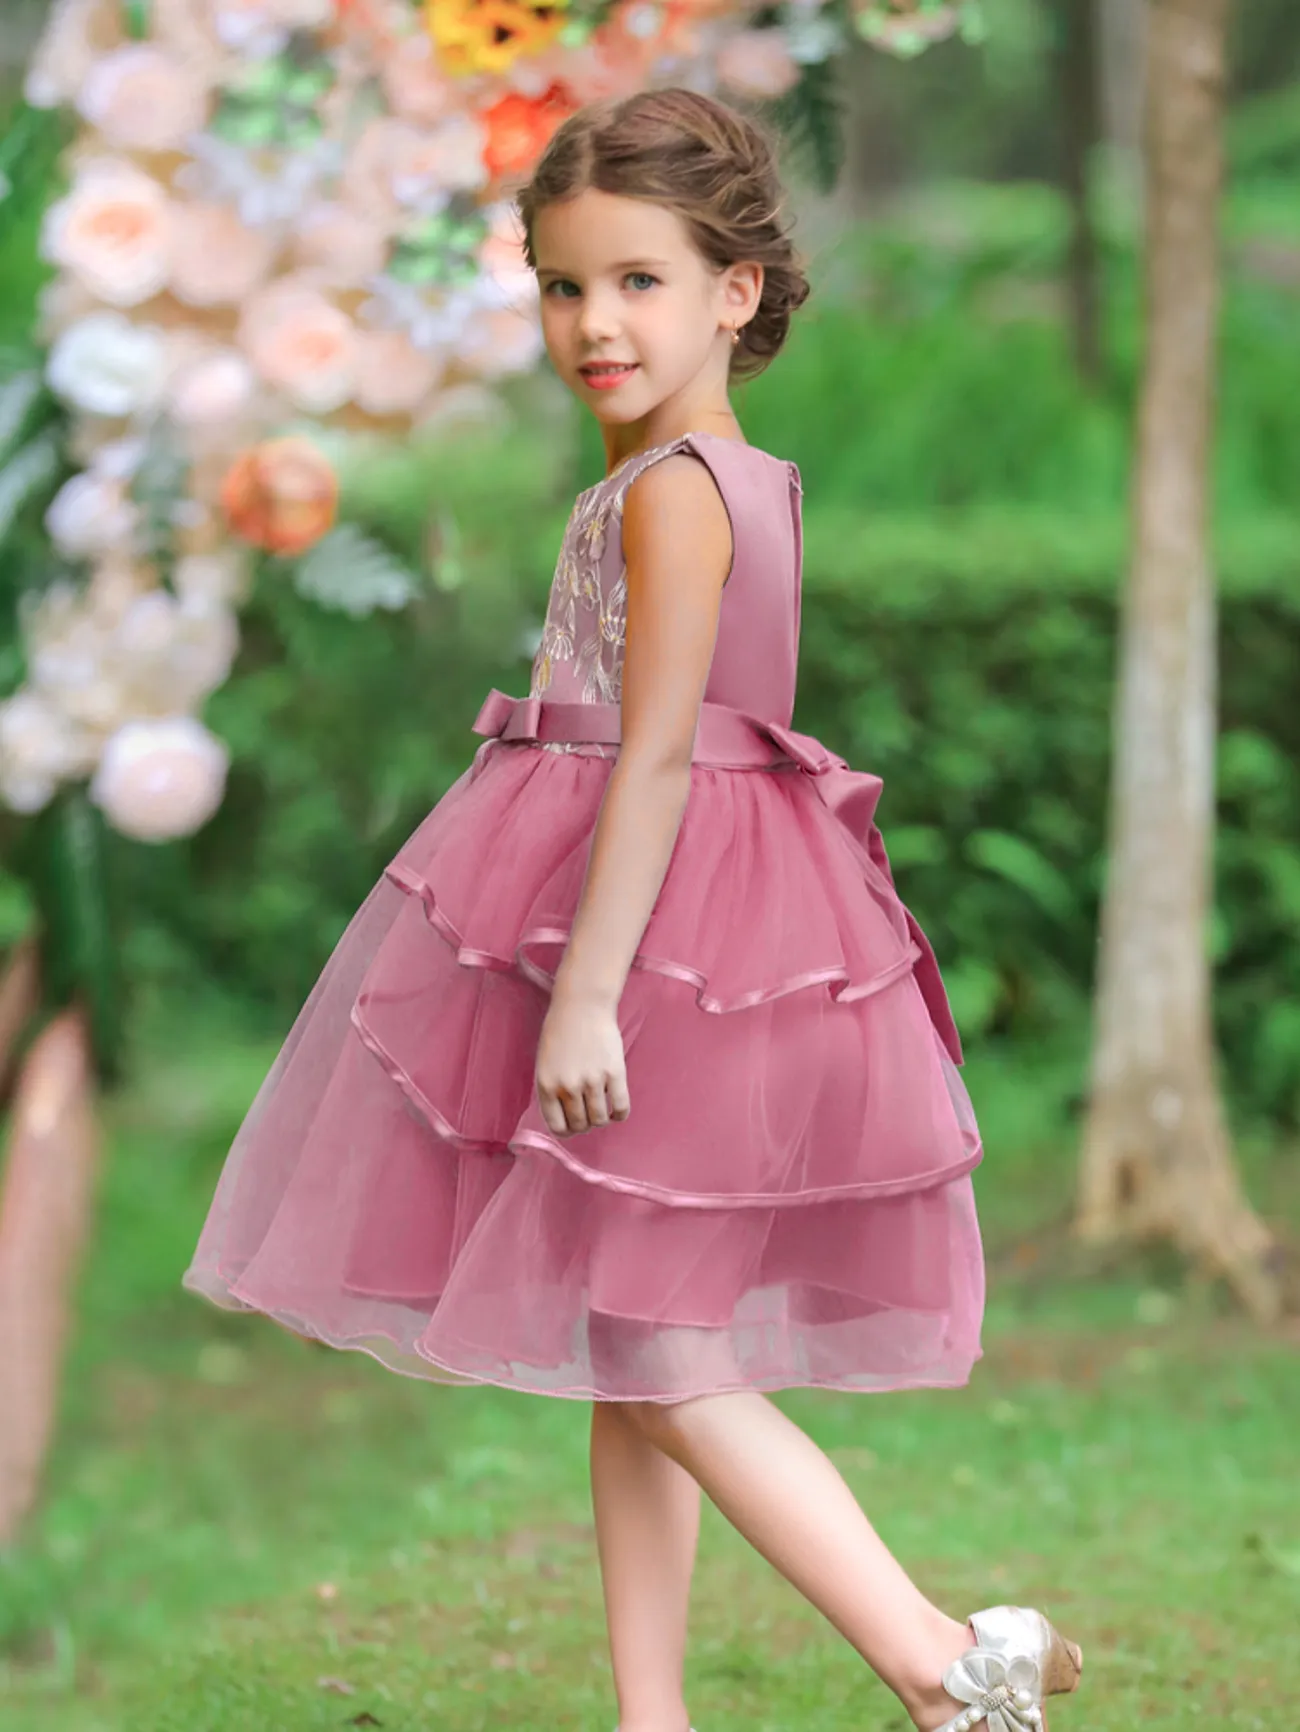 Toddler Girl Elegant  Multi-layeredTropical Flower Costume Dress  Dark Pink big image 1